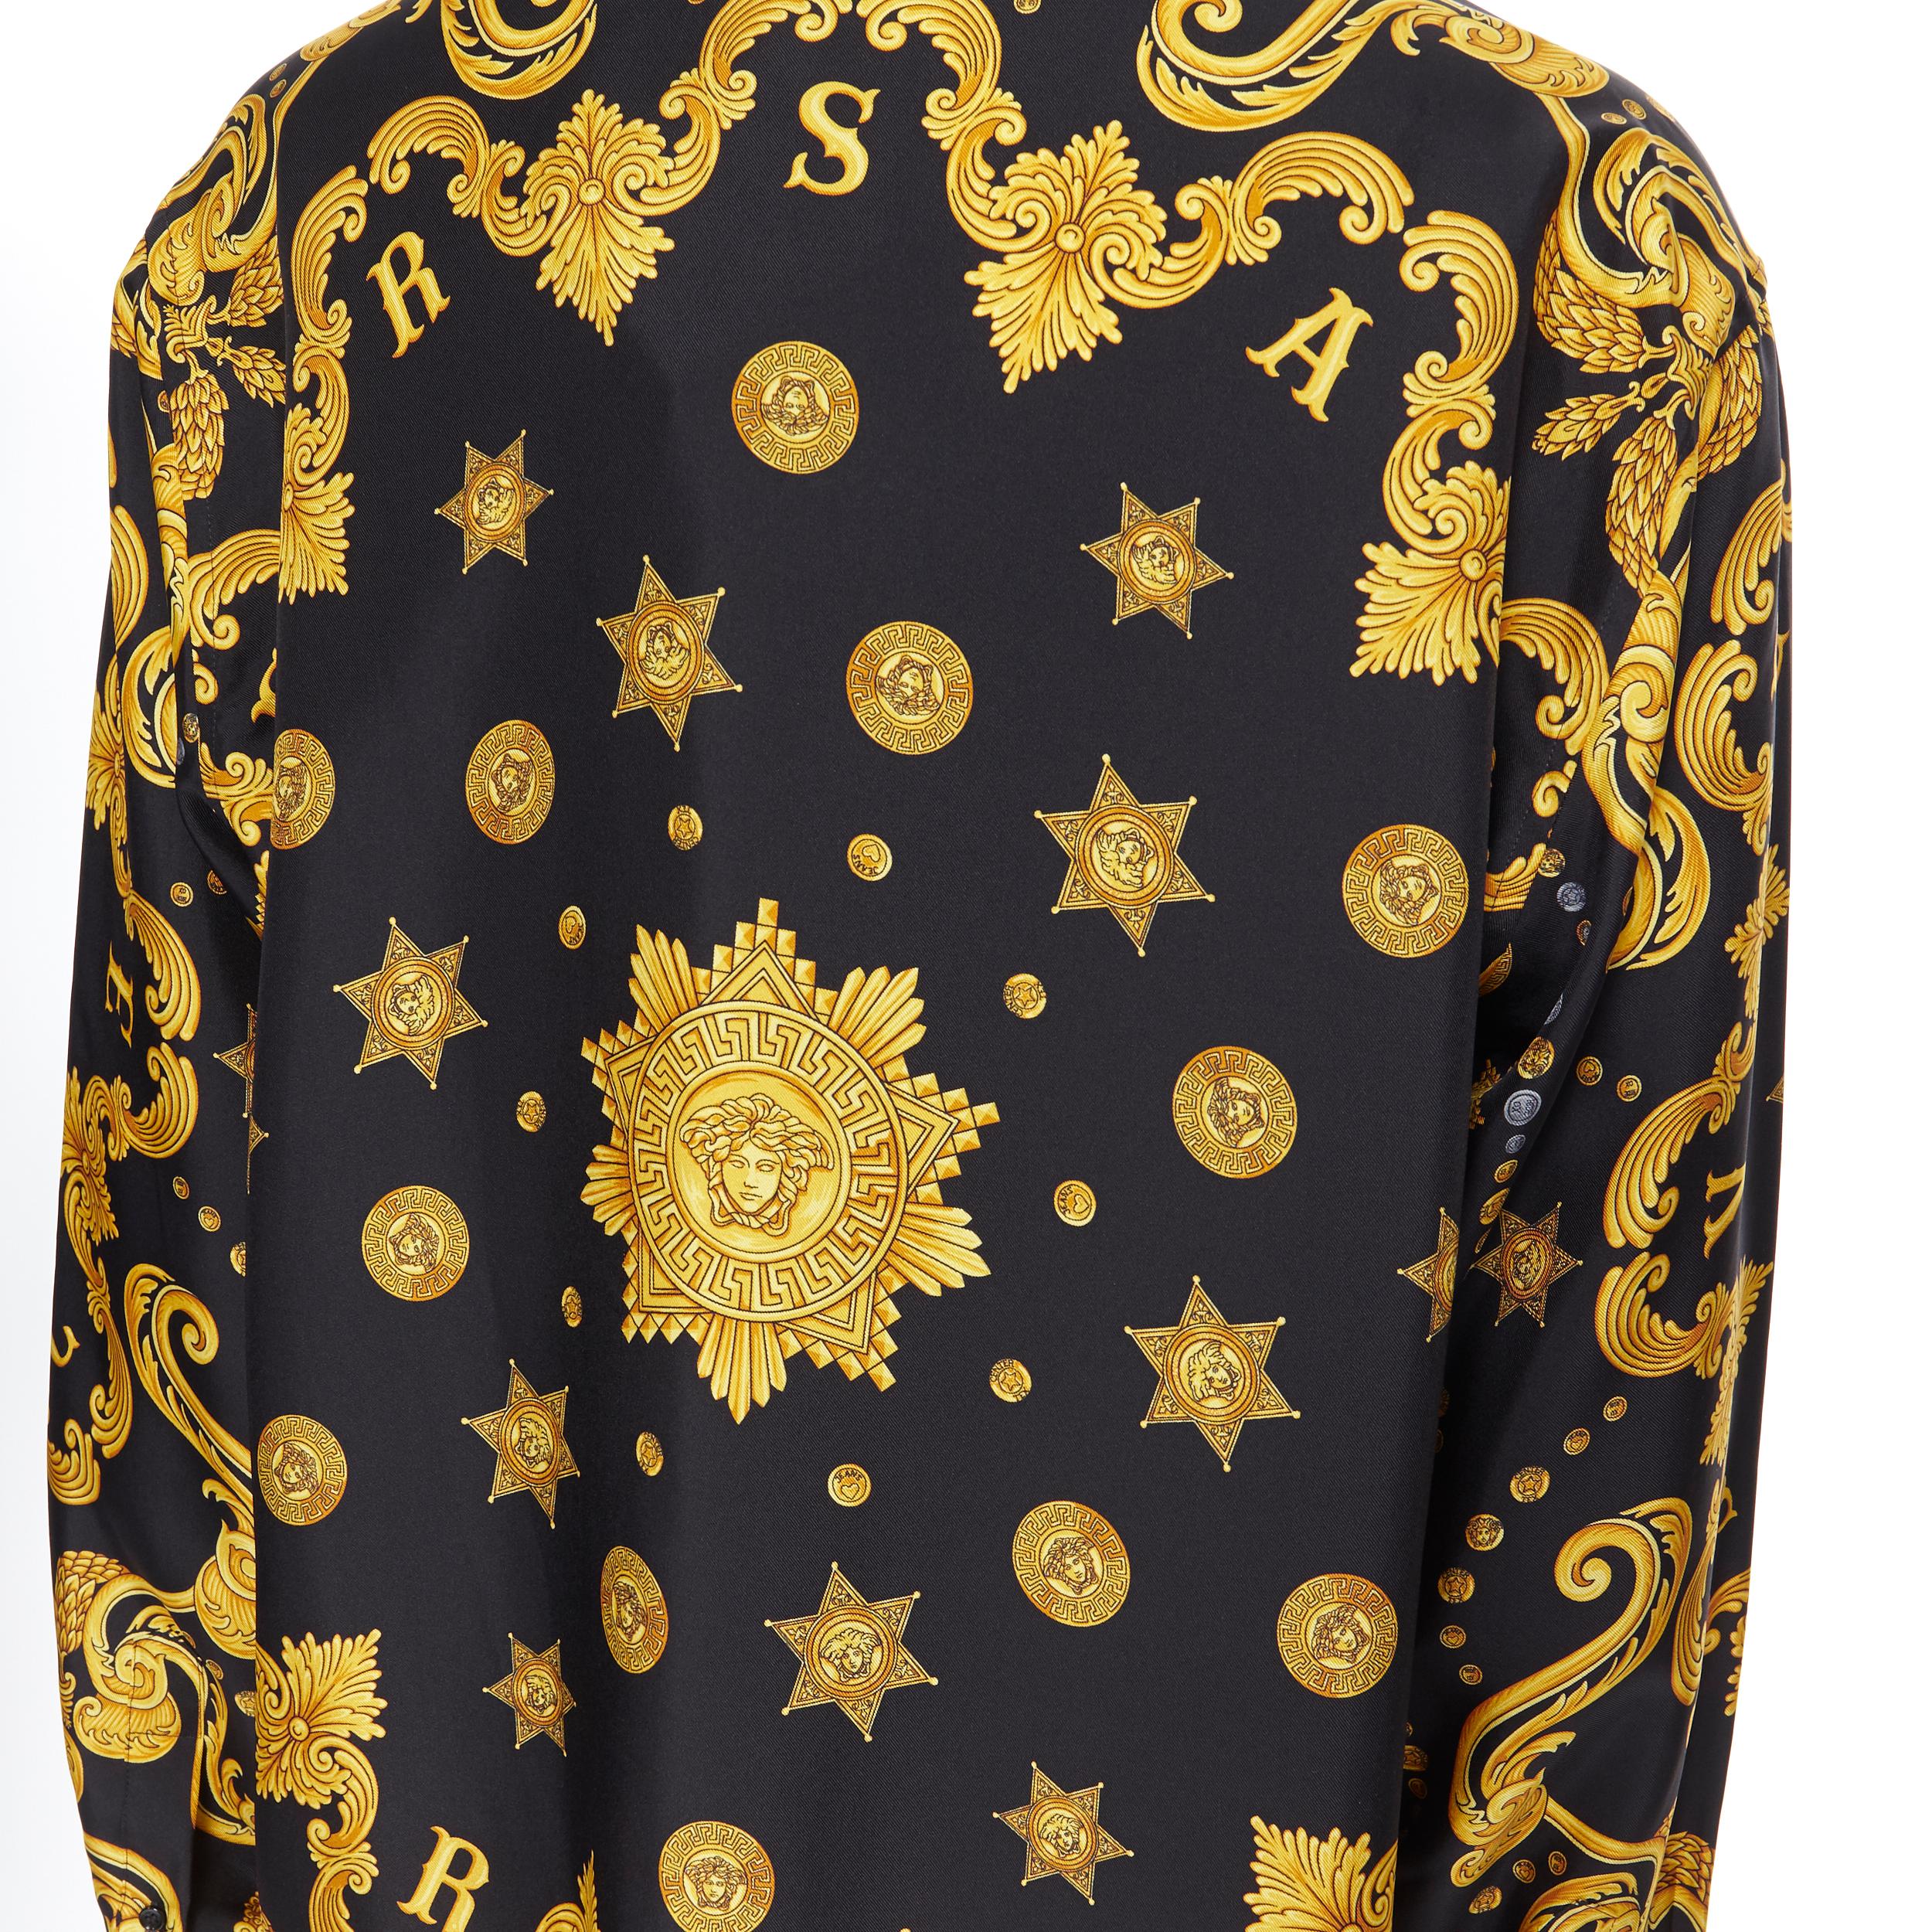 new VERSACE black gold Medusa coin western star baroque print silk shirt EU41 L 3